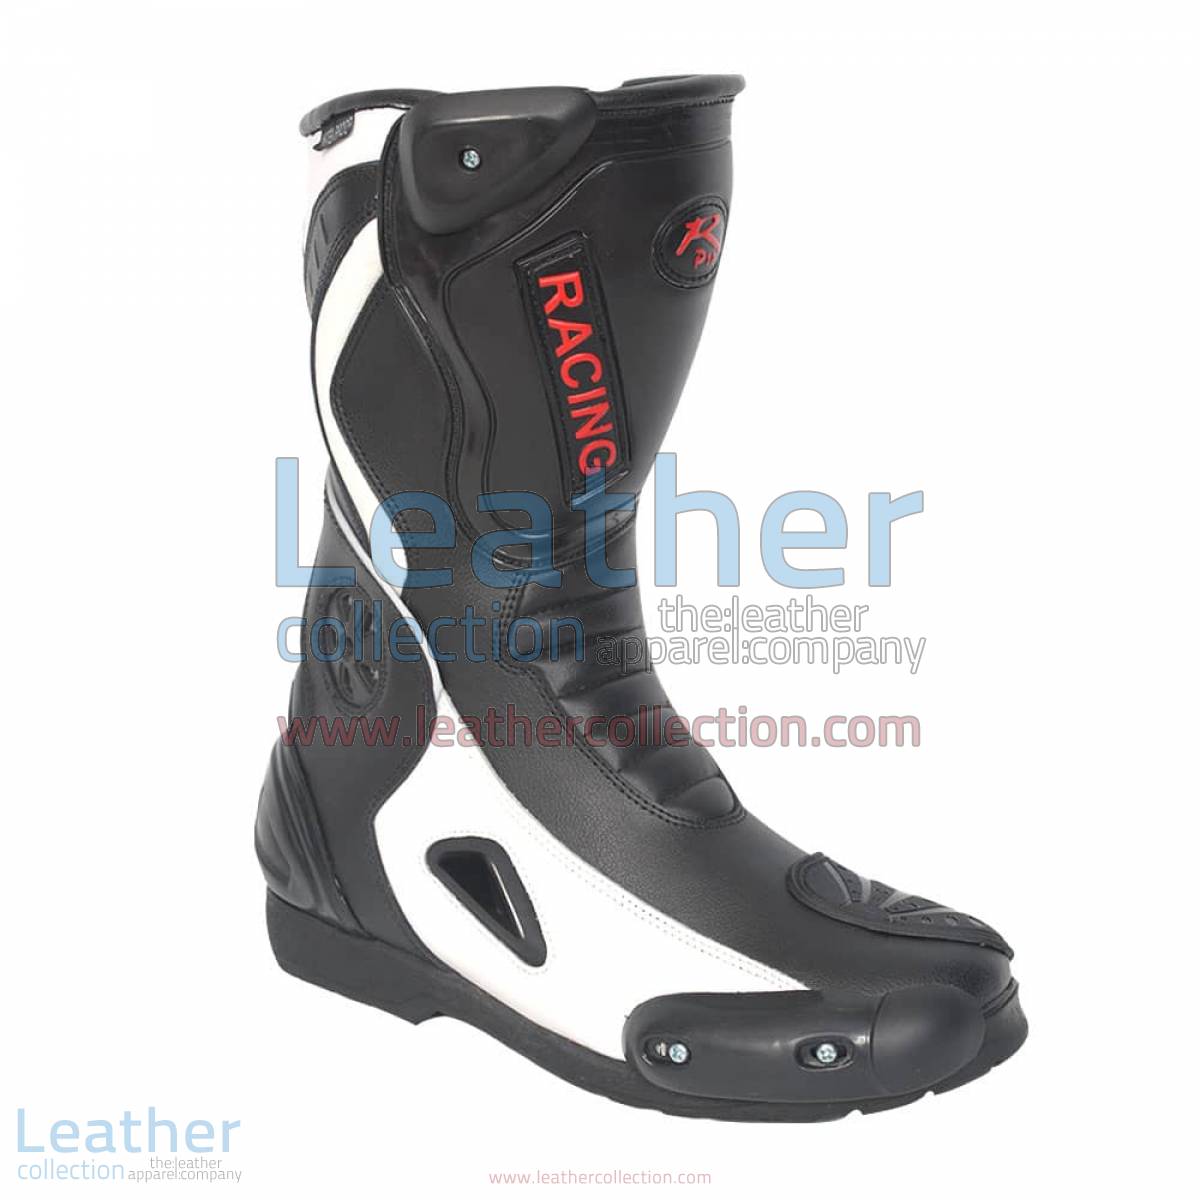 Phantom Motorcycle Rider Boots | rider boots,motorcycle rider boots